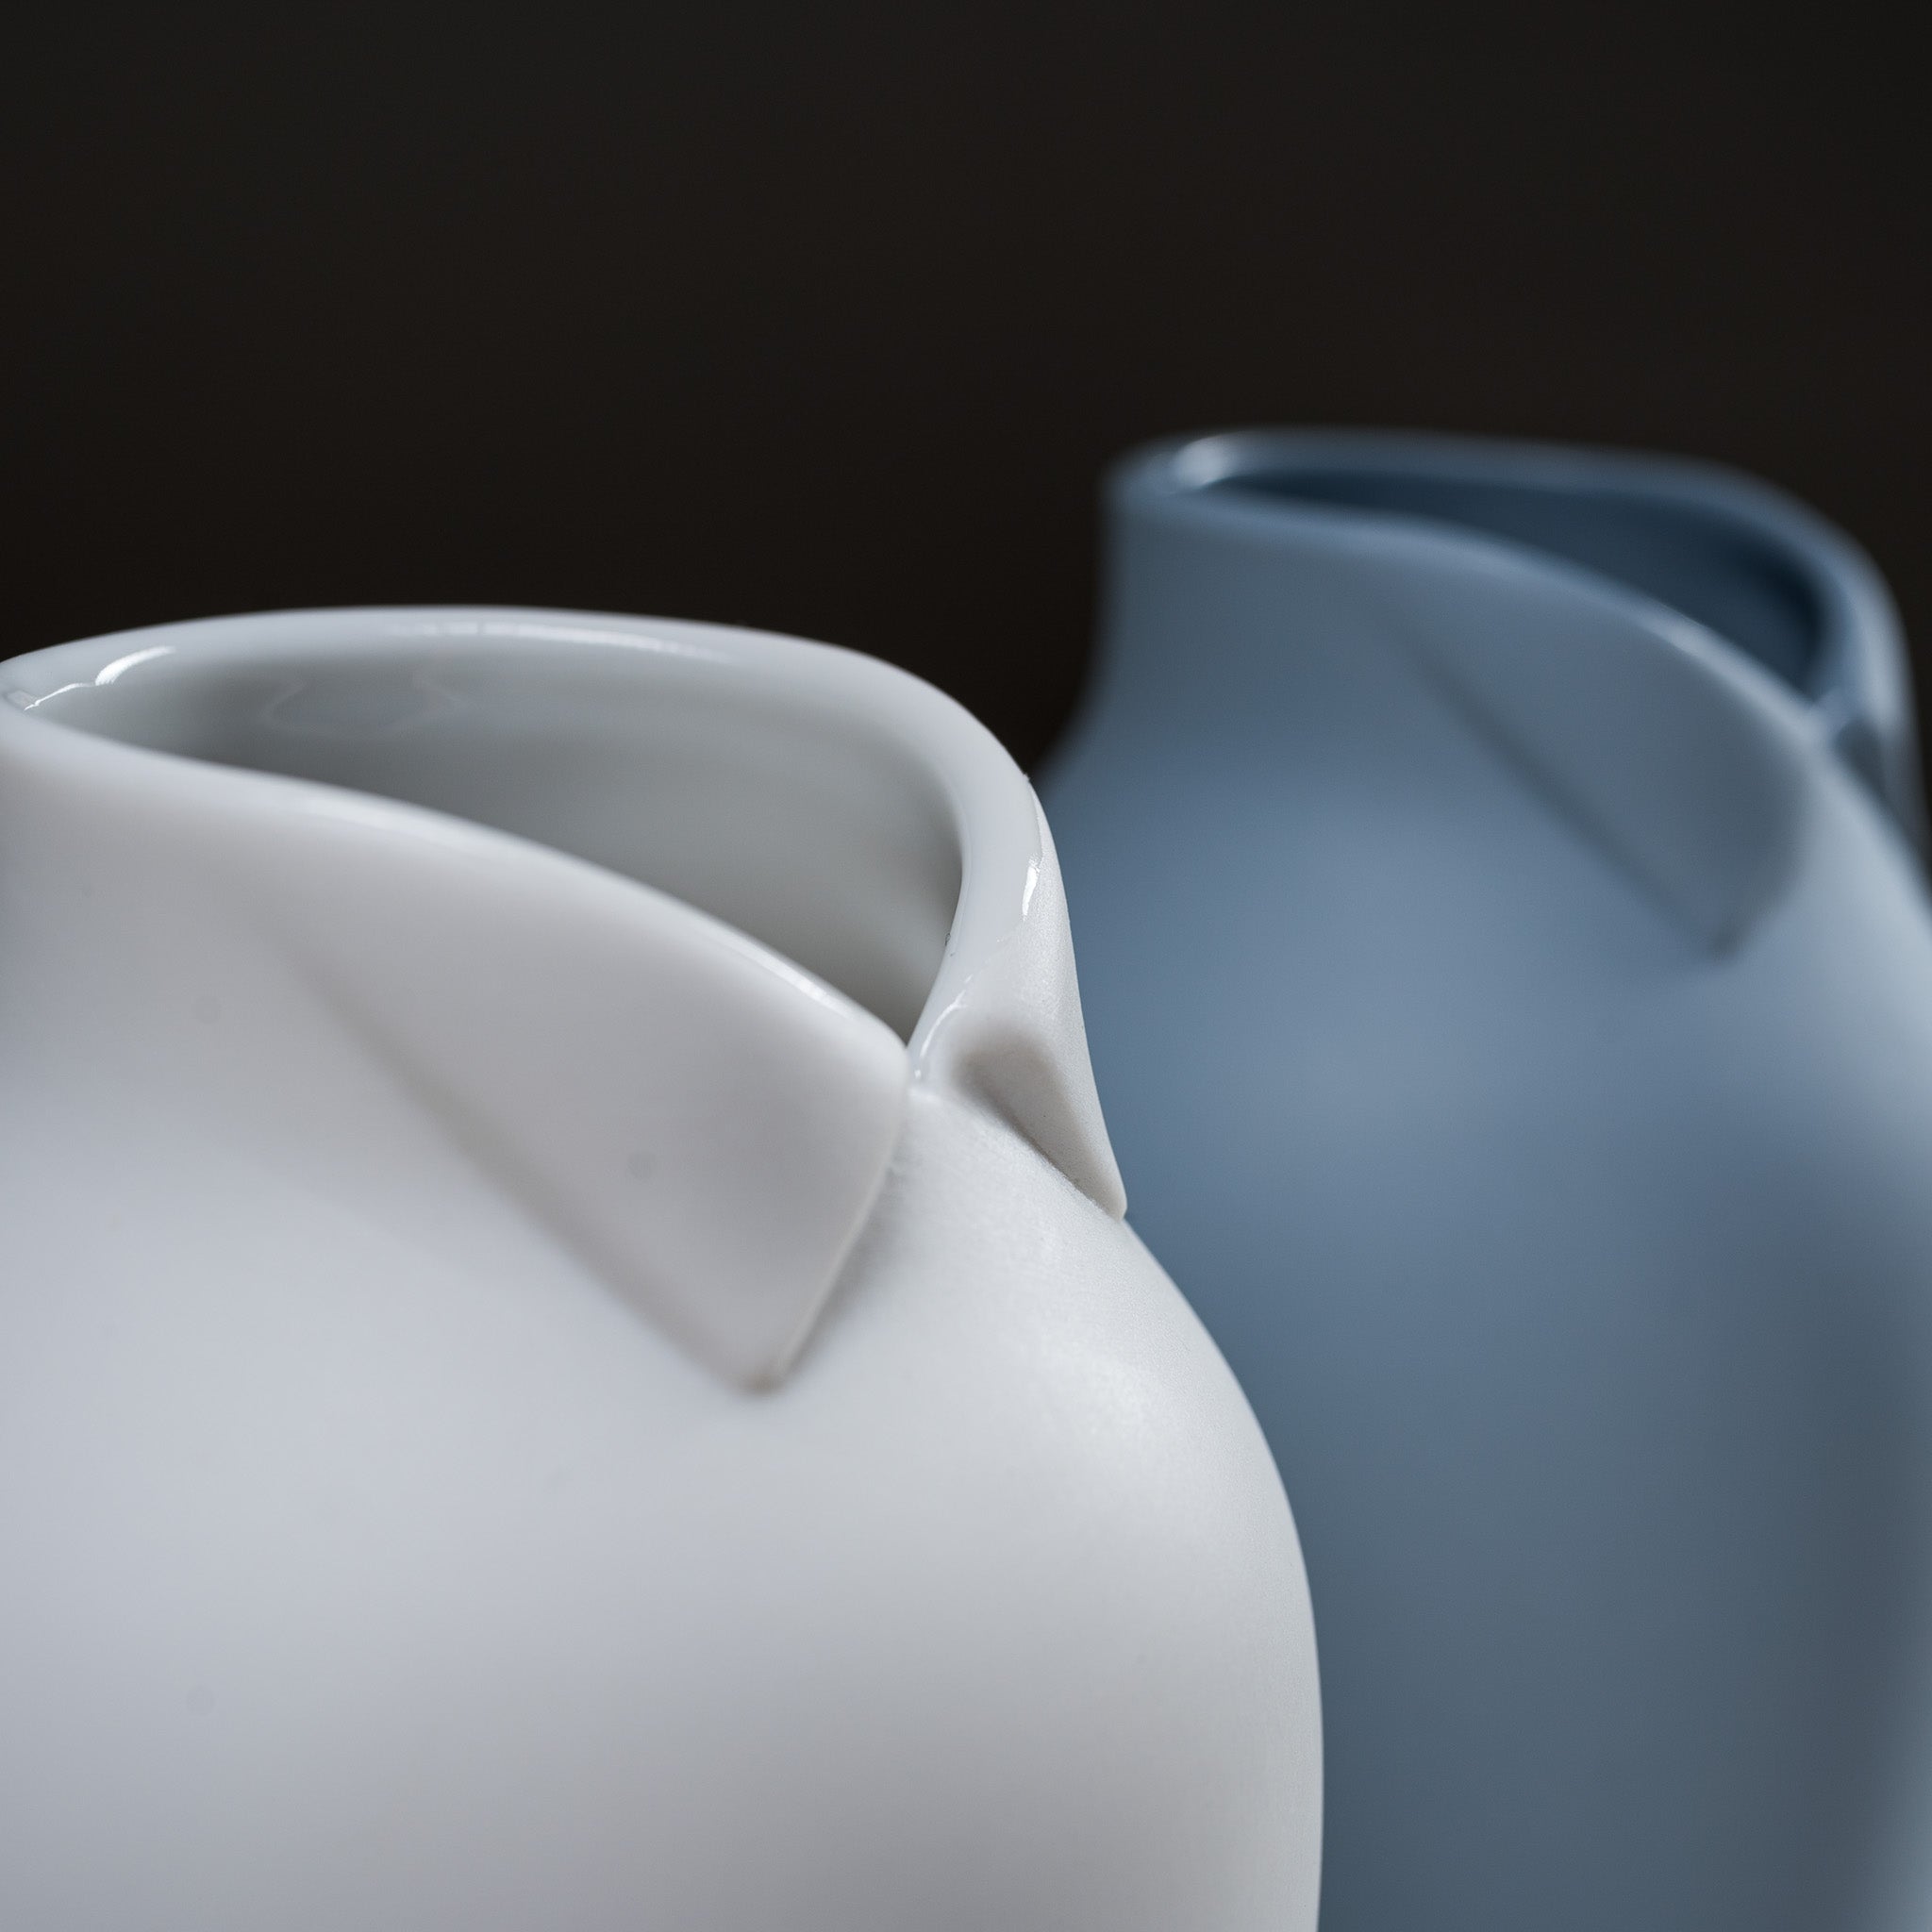 Ceramic Japan Dress-up Vase - 2 Colour Options